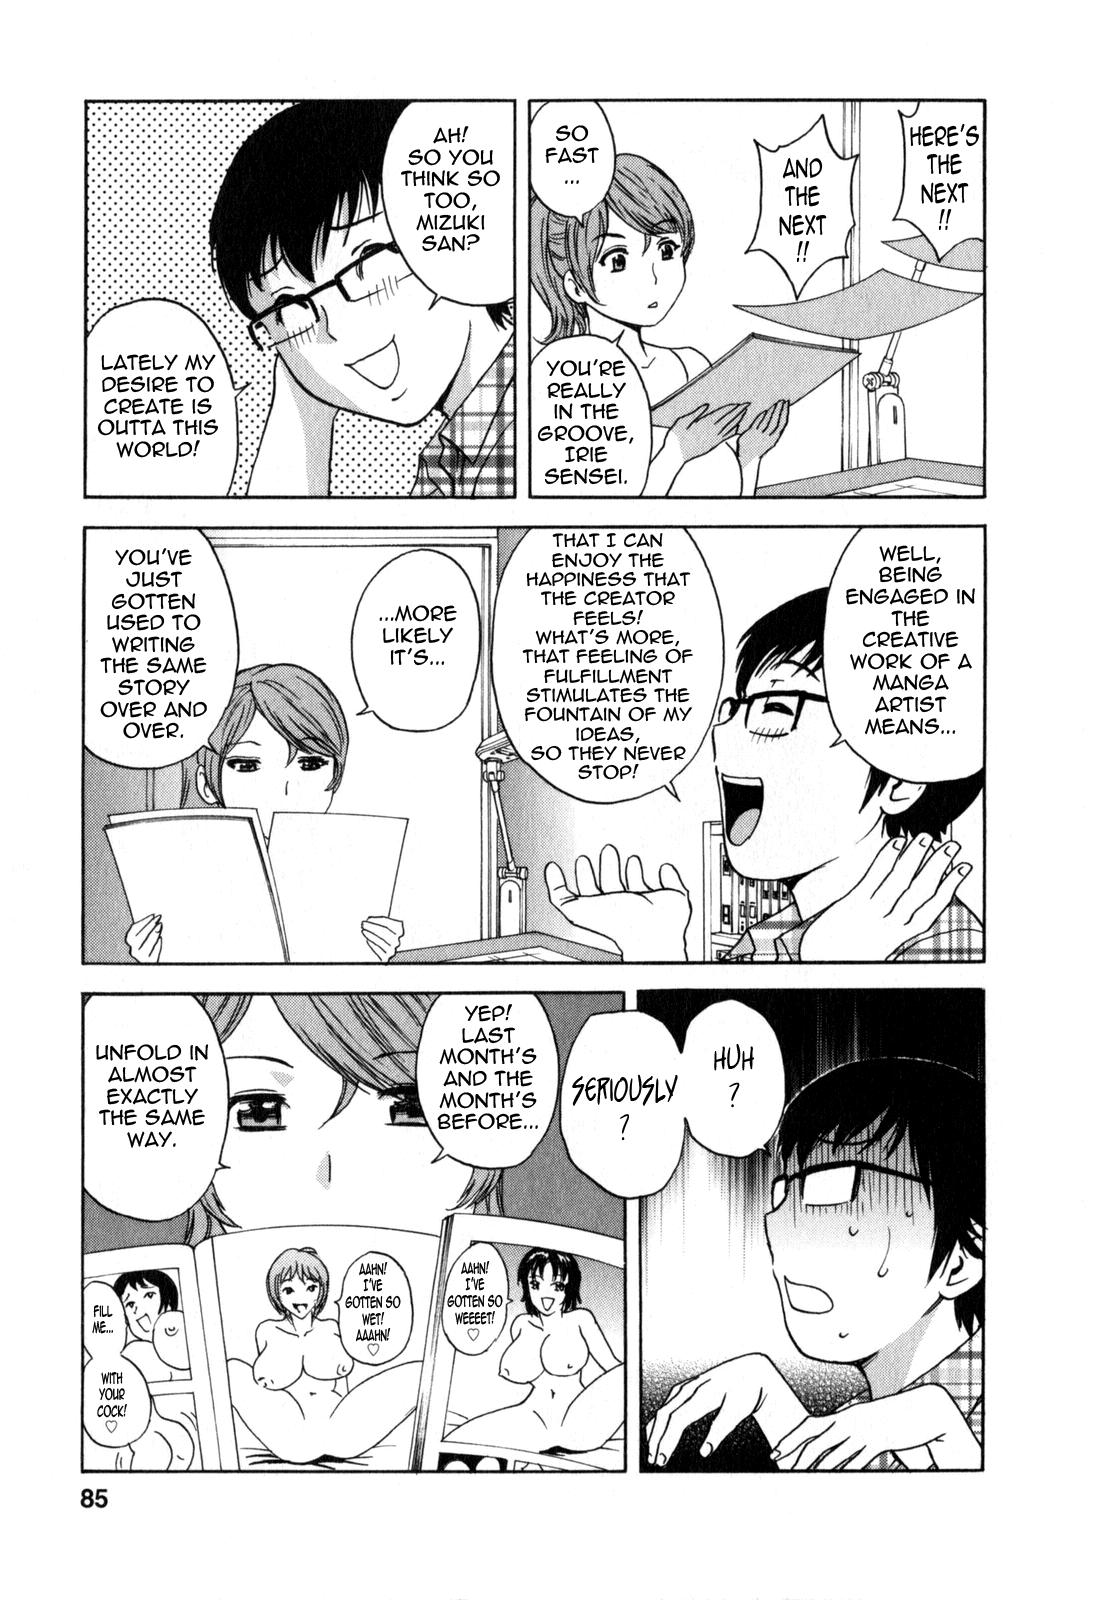 [Hidemaru] Life with Married Women Just Like a Manga 2 - Ch. 1-7 [English] {Tadanohito} 88